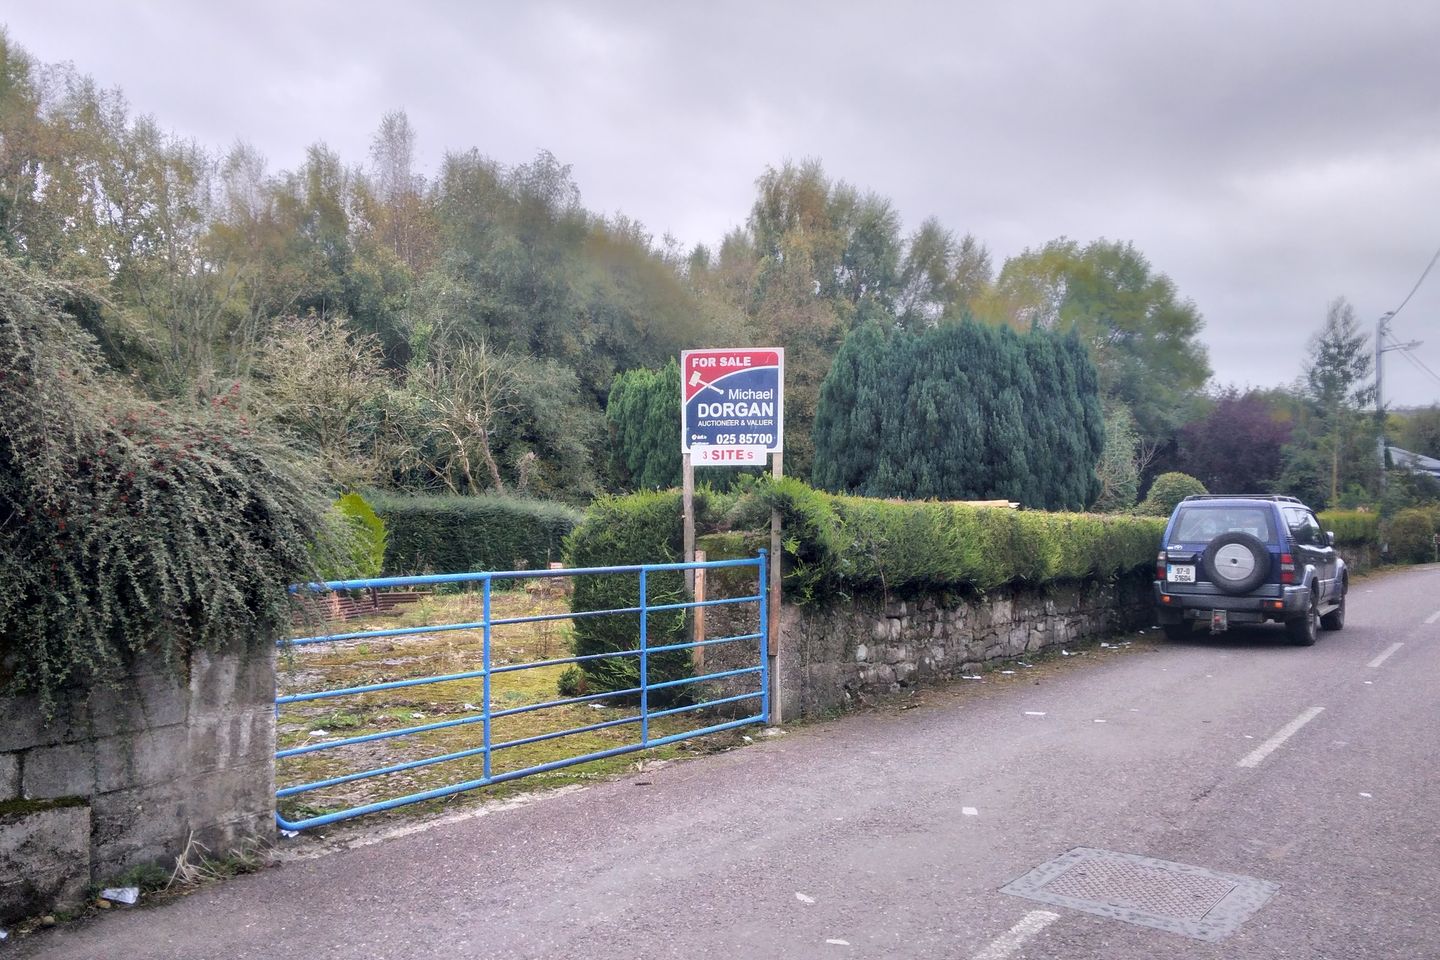 Ronald Reagan Site, River Lane, Ballyporeen near, Mitchelstown, Co. Cork